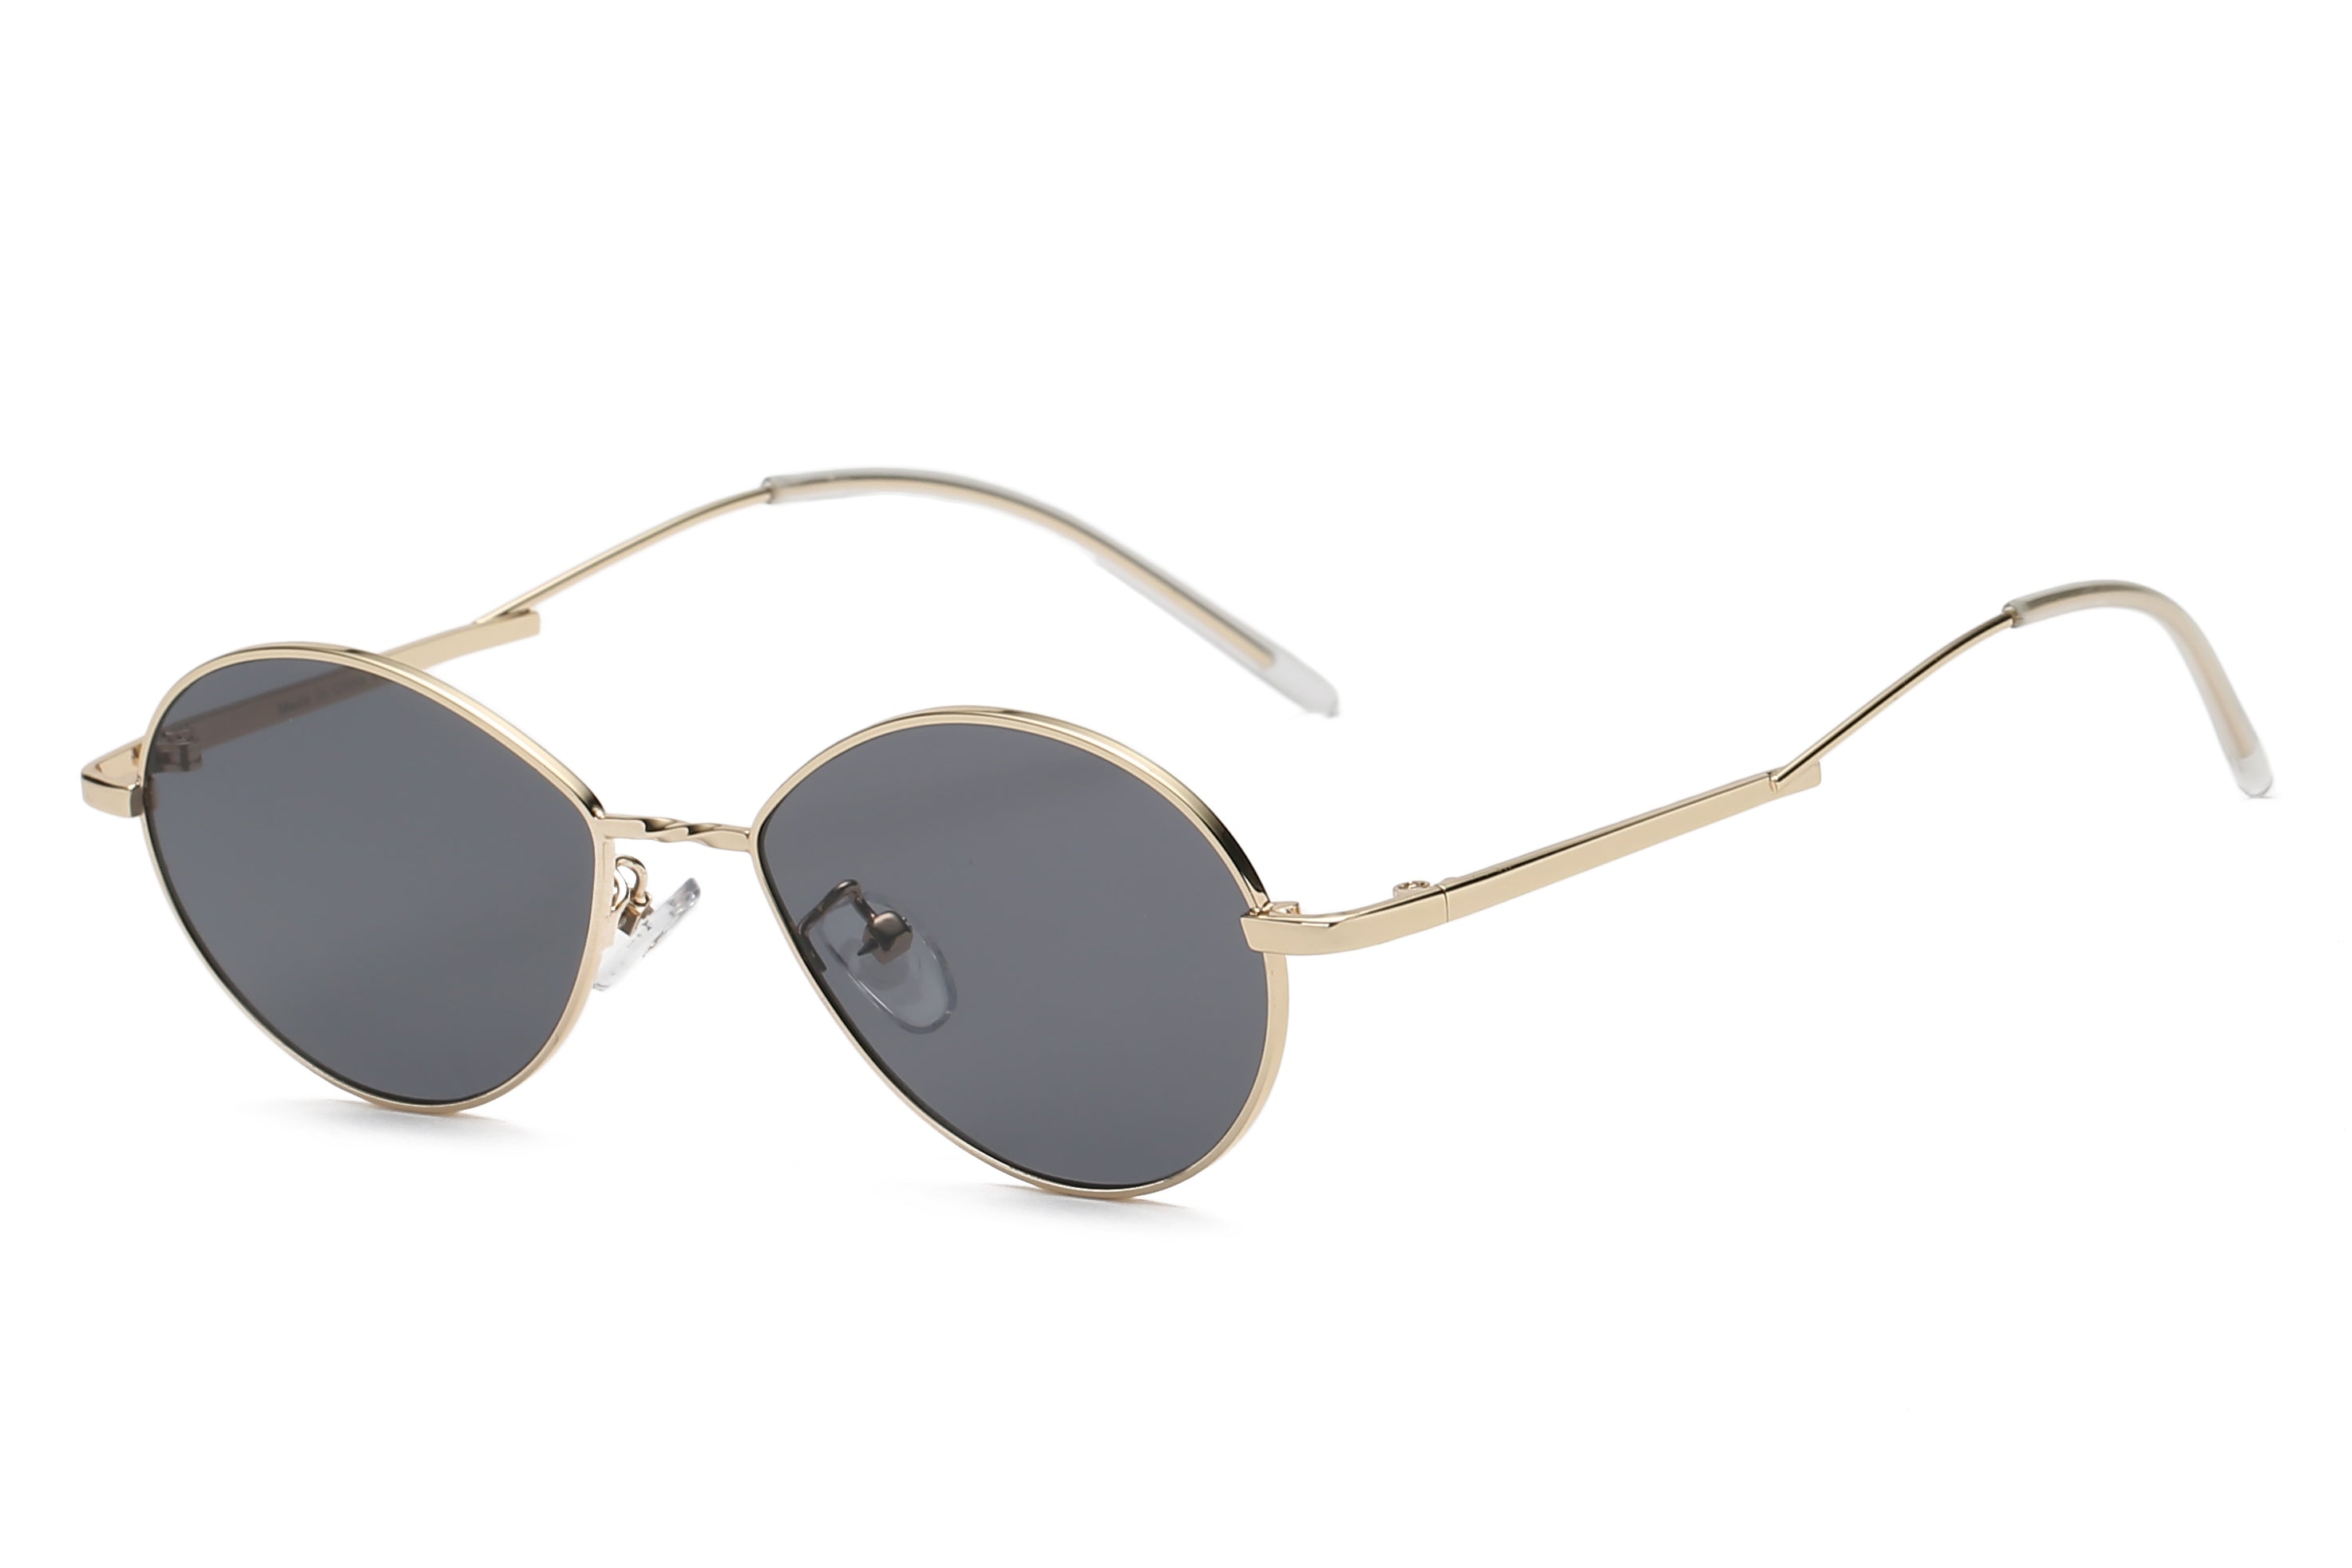 S3009 - Small Retro Vintage Metal Round Sunglasses Black